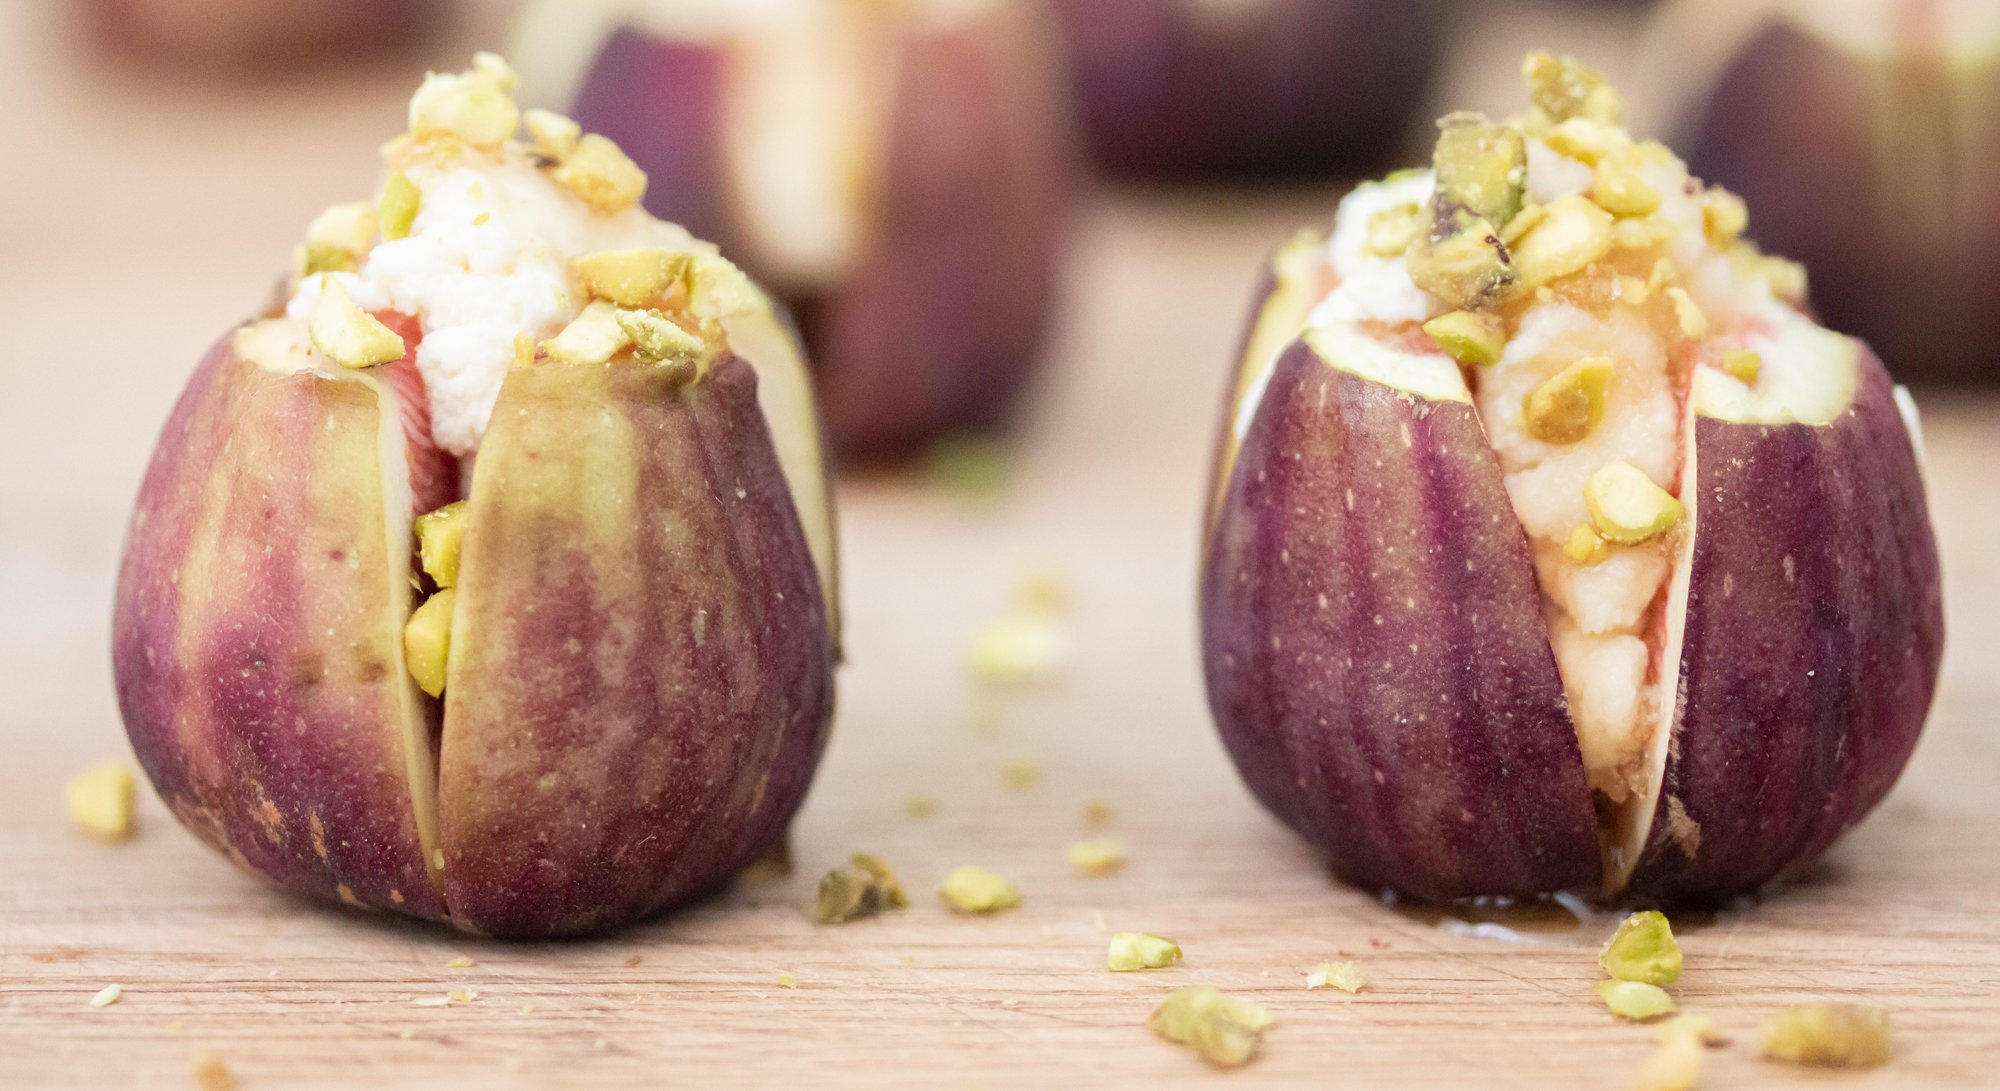 Honey Ricotta Stuffed Figs with Pistachio Image 1